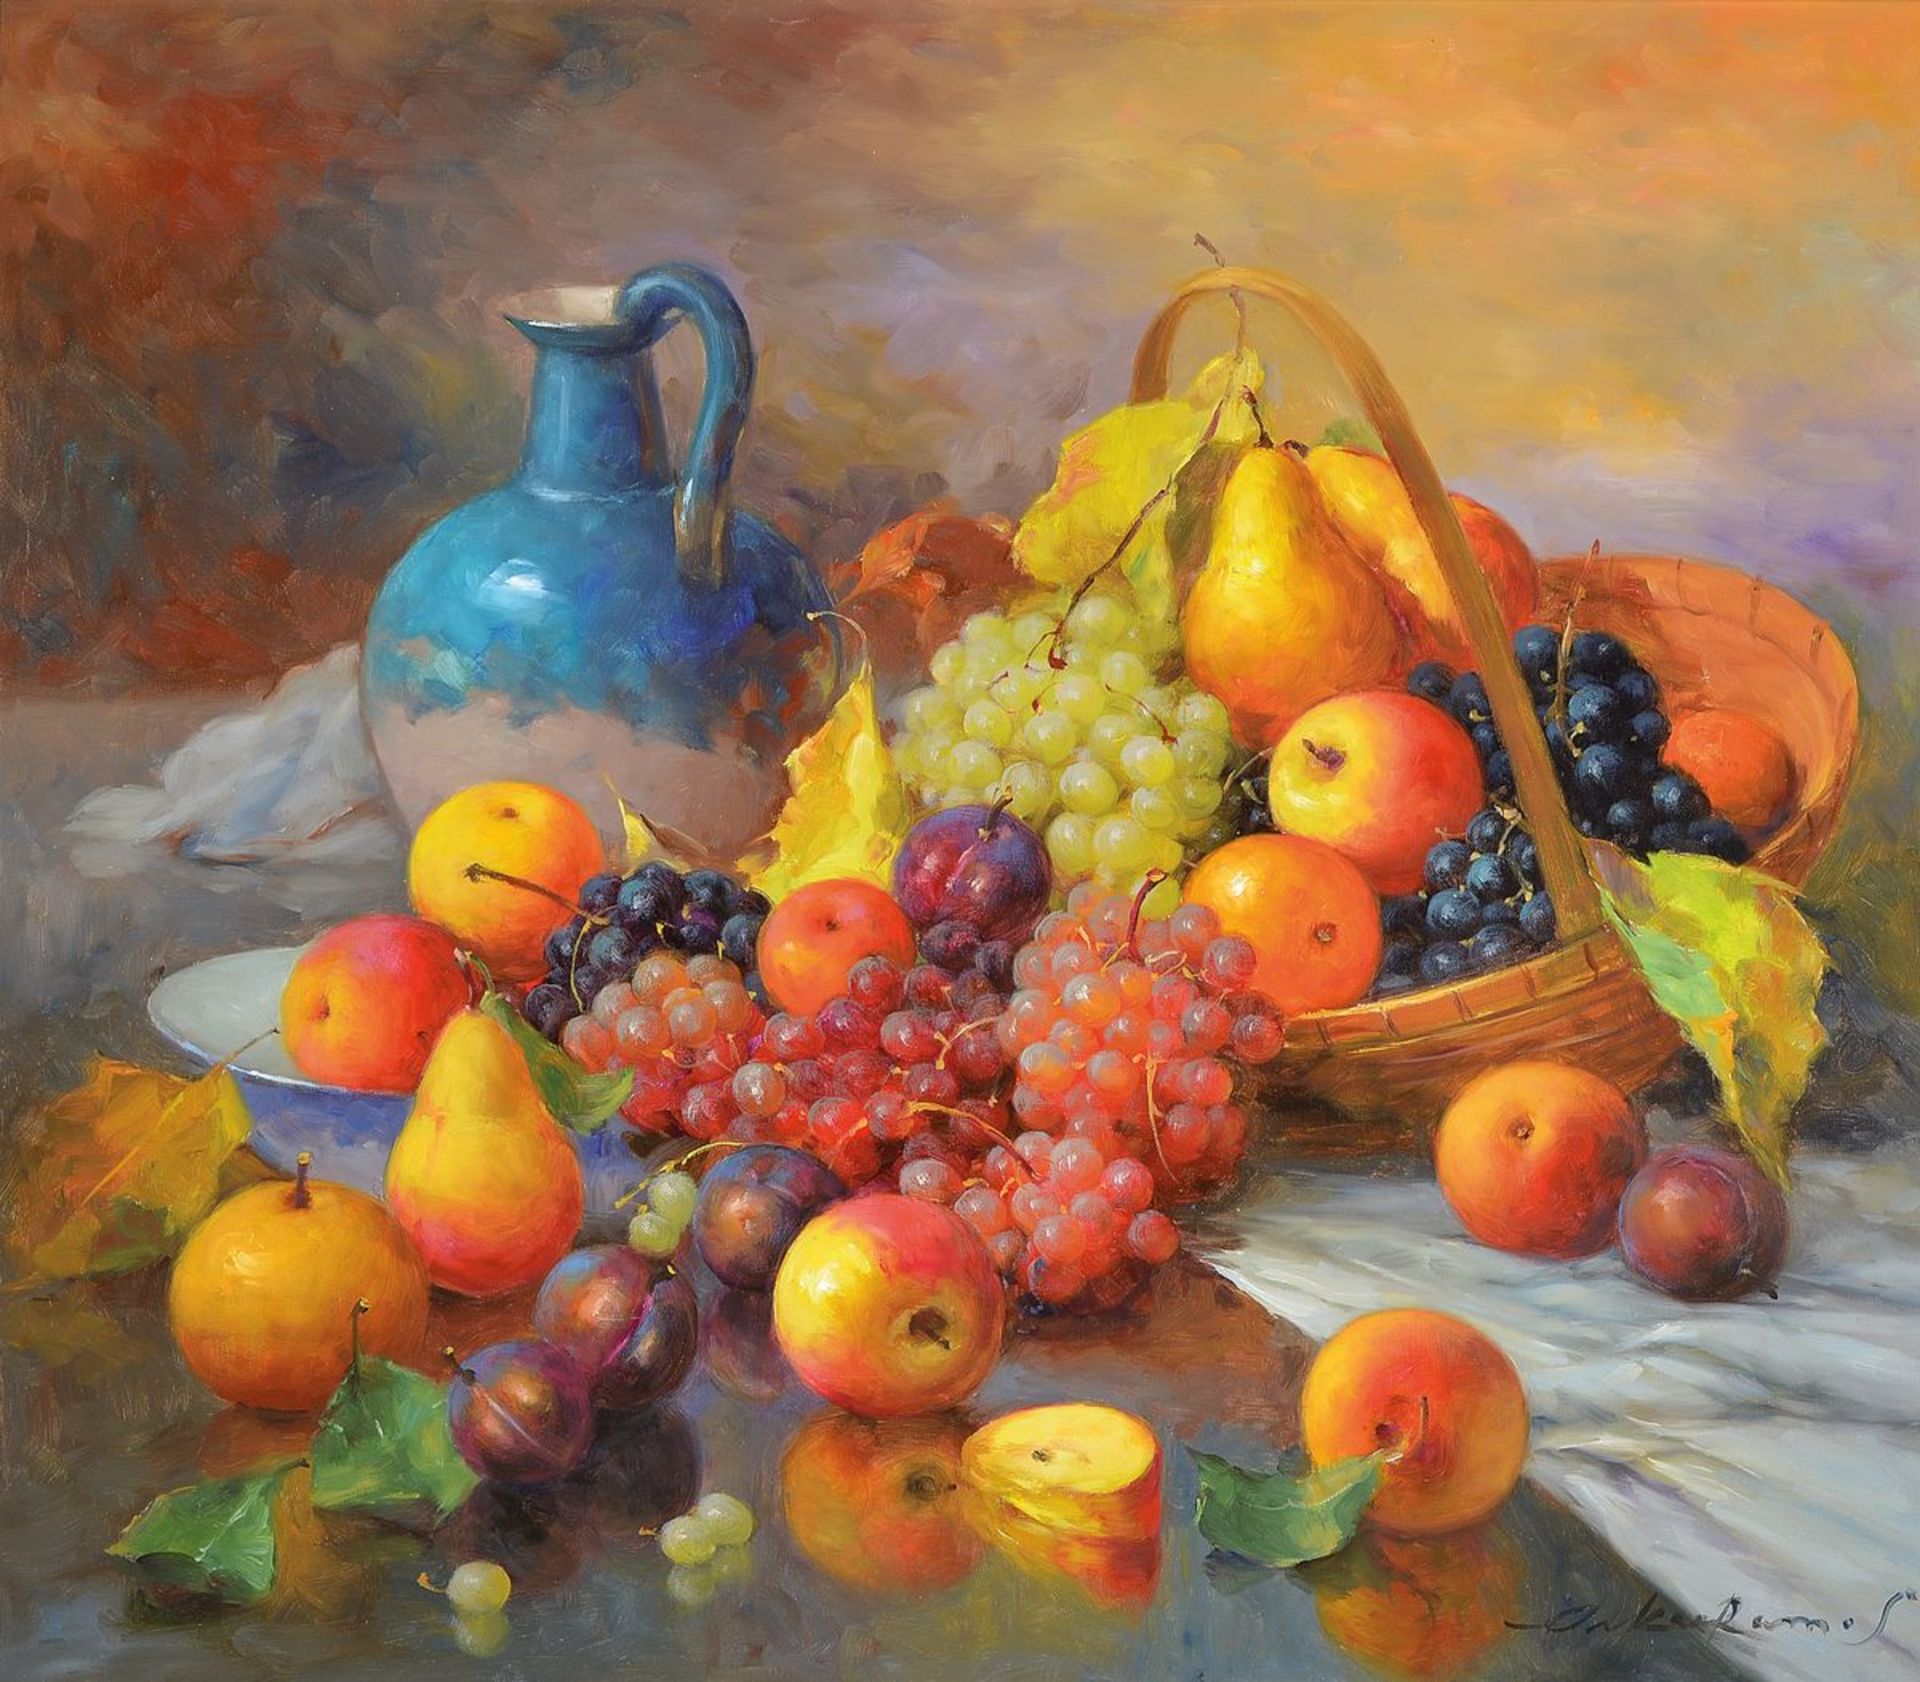 Oskar Ramos, born 1948, still life with apples, grapes, plums, pears and blue jug, oil/ canvas,